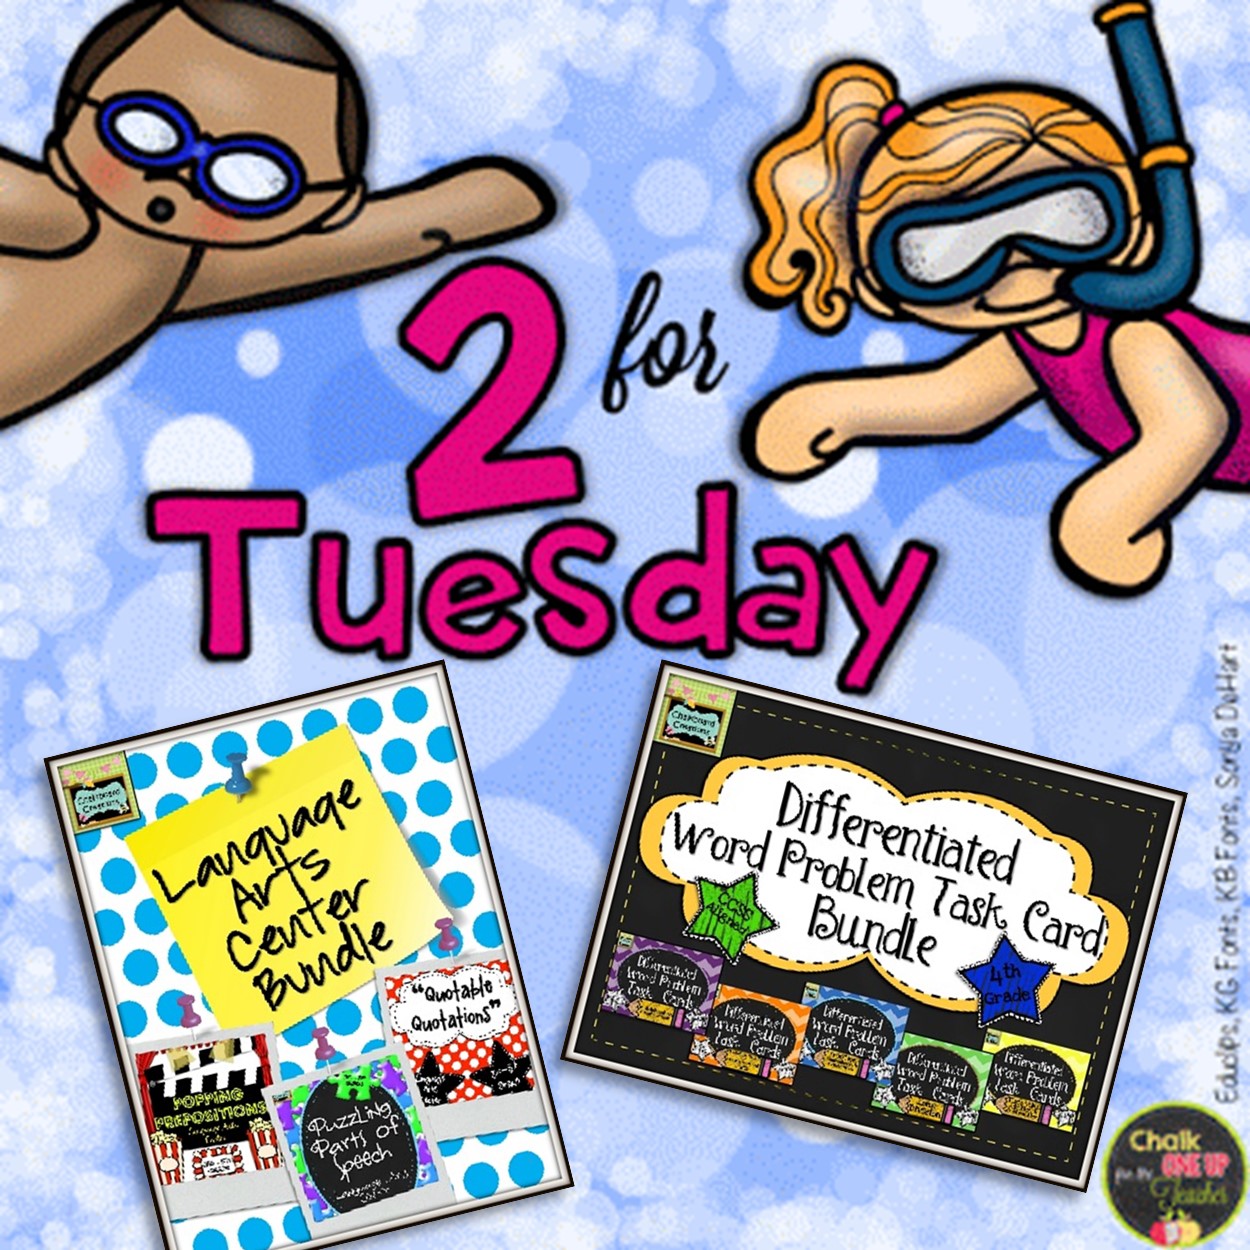 2 for Tuesday: Language Art Center and Math Task Card Bundles